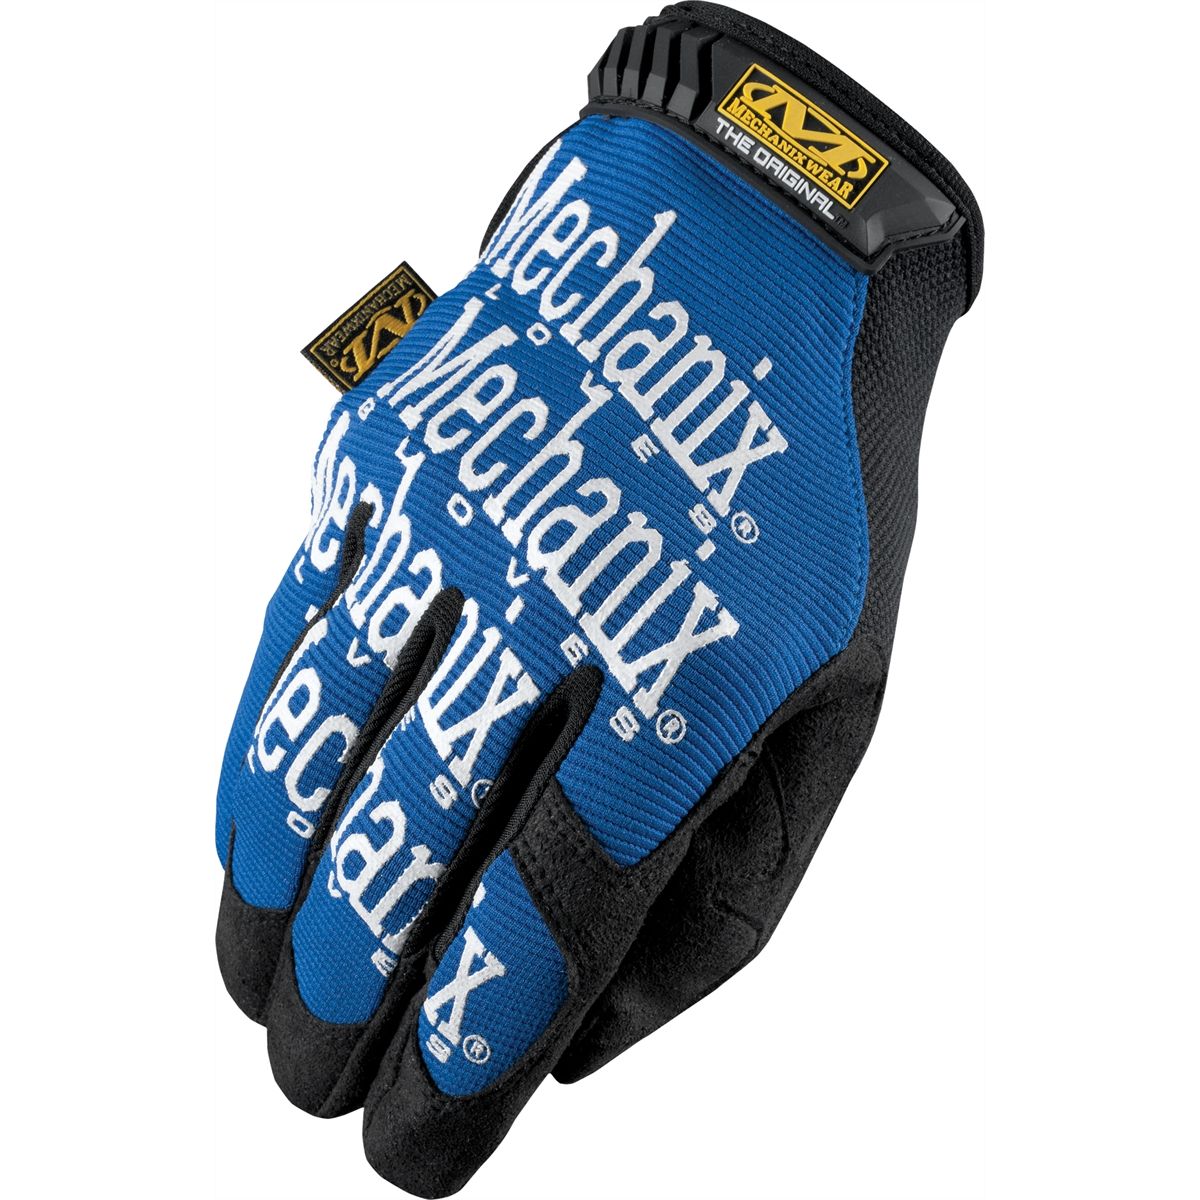 Mechanix Wear Original Race Work Glove Camo